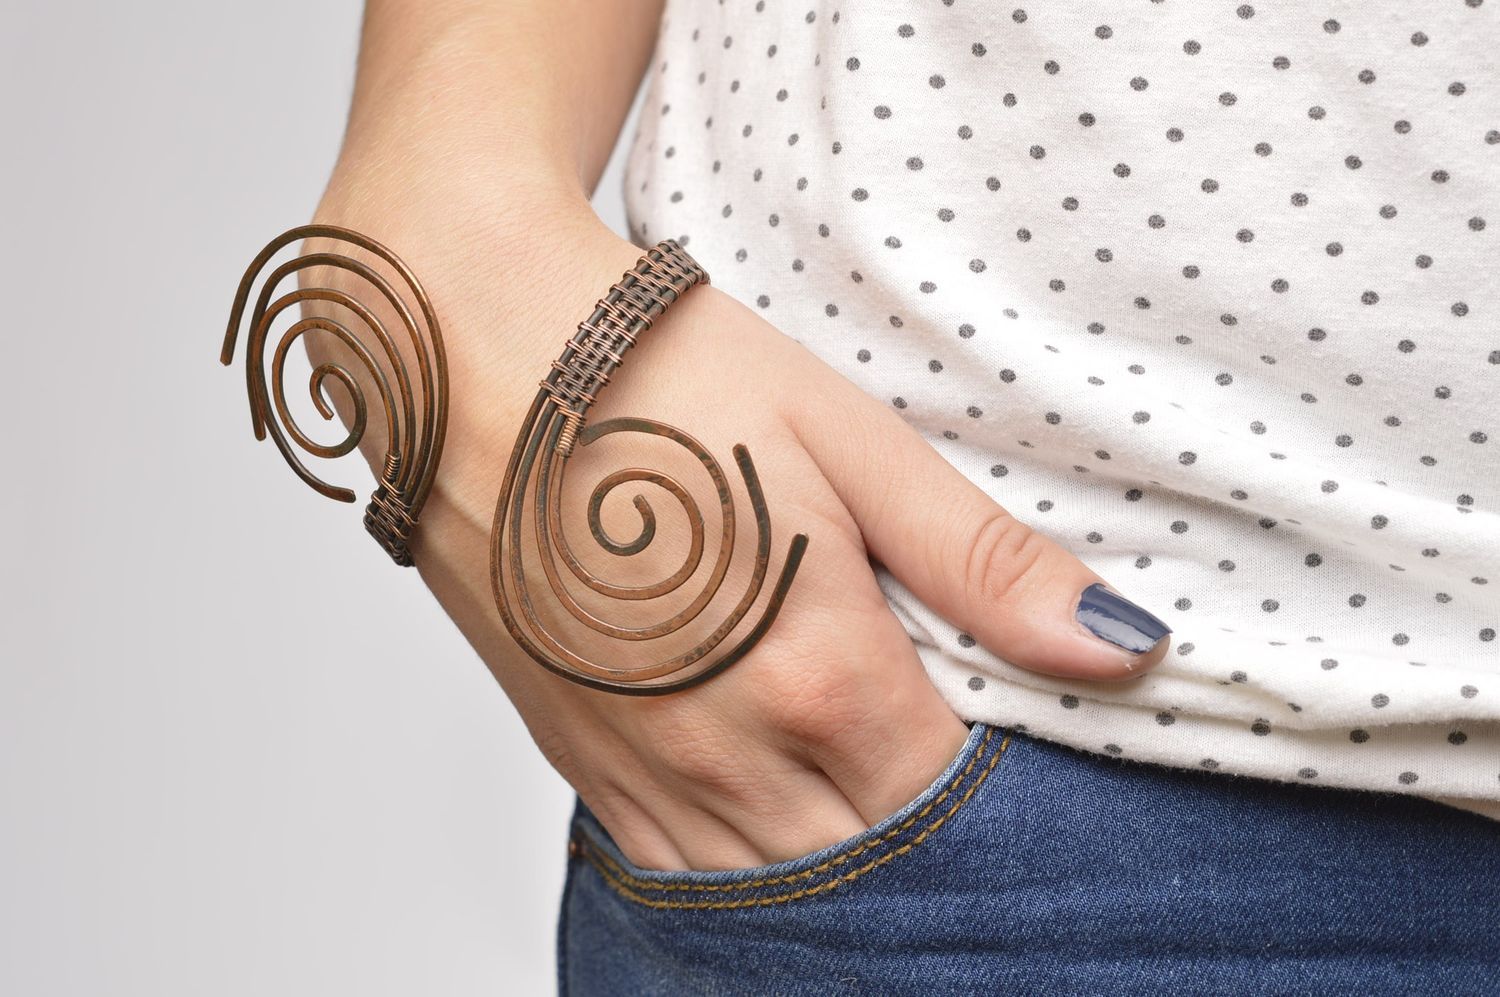 Beautiful handmade metal bracelet wrist bracelet designs accessories for girls photo 2